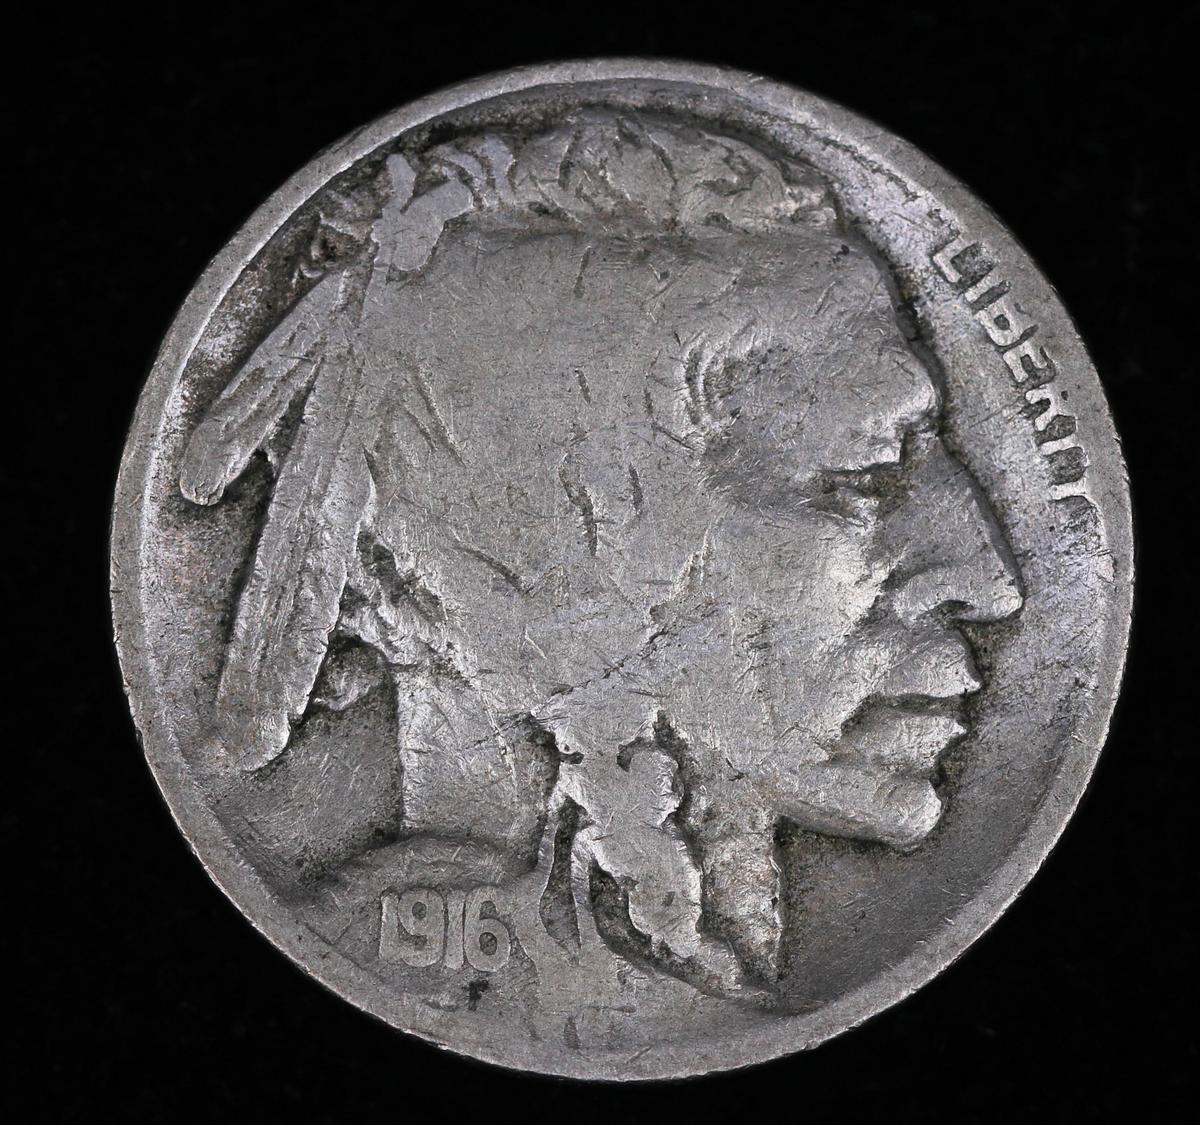 1916 S BUFFALO HEAD NICKEL COIN